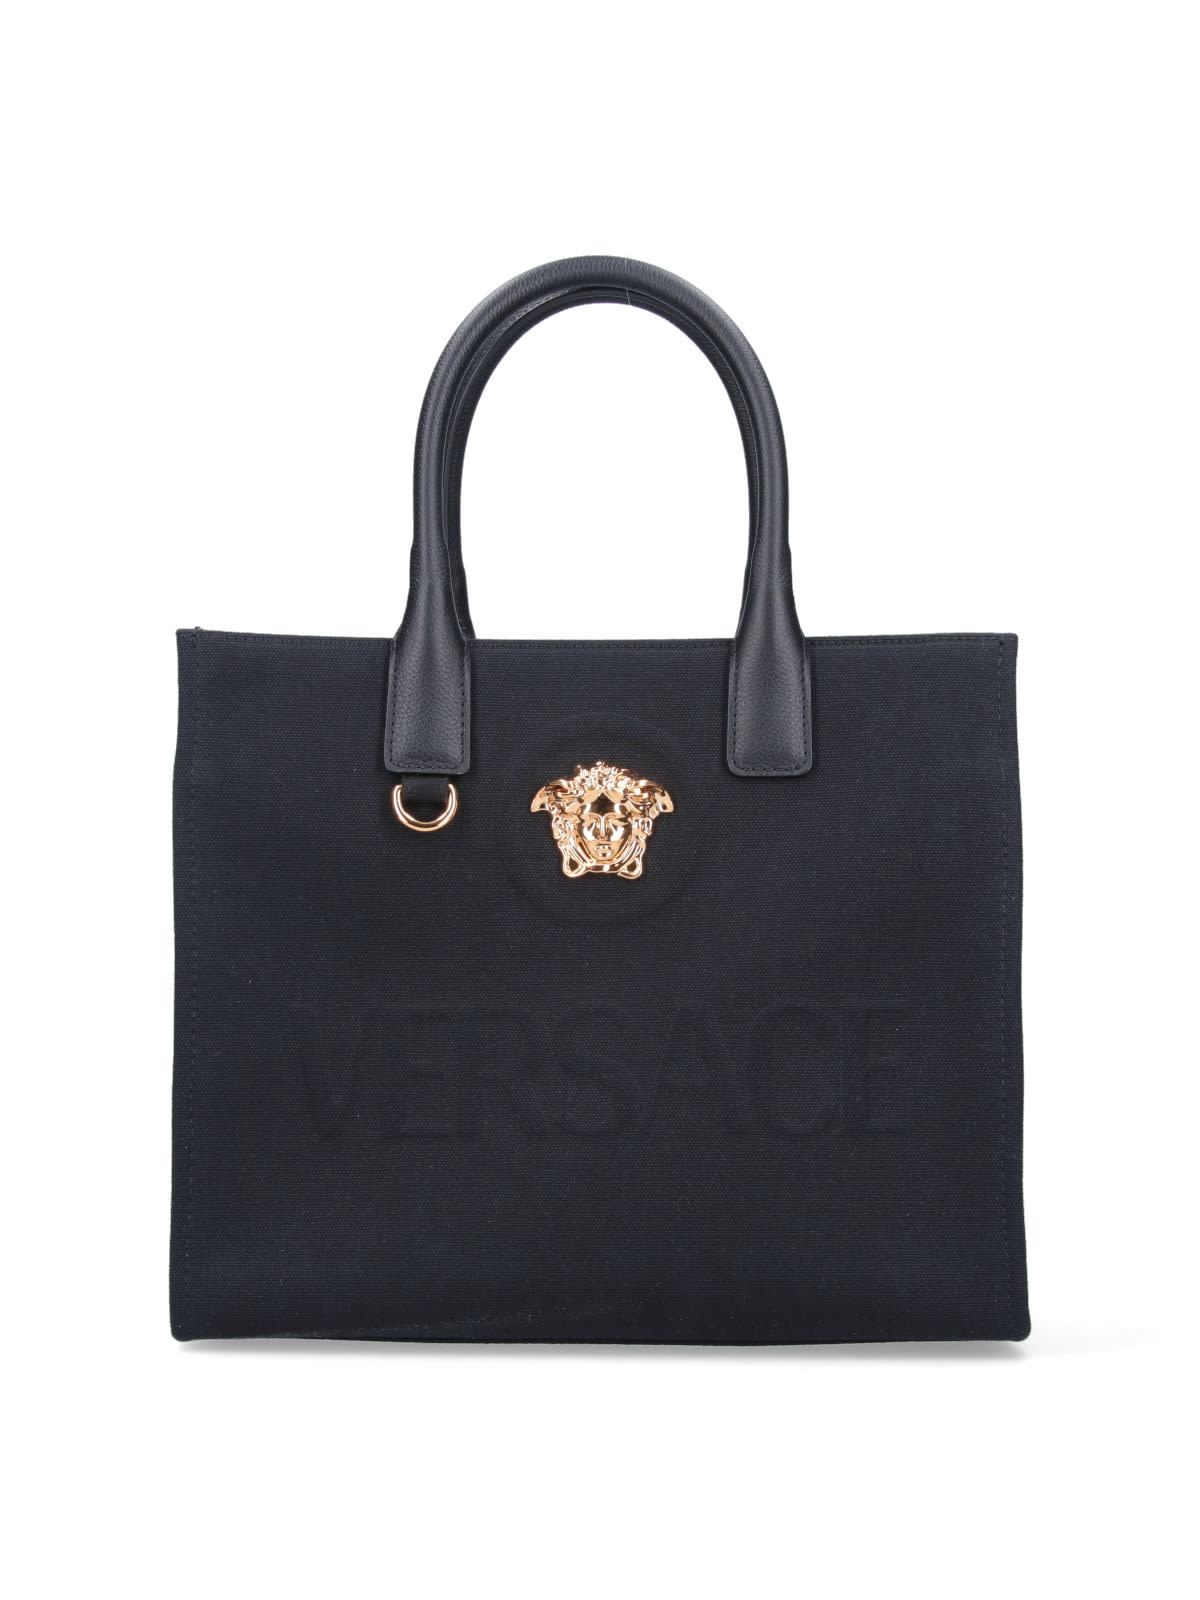 Versace La Medusa Tote Bag In Black